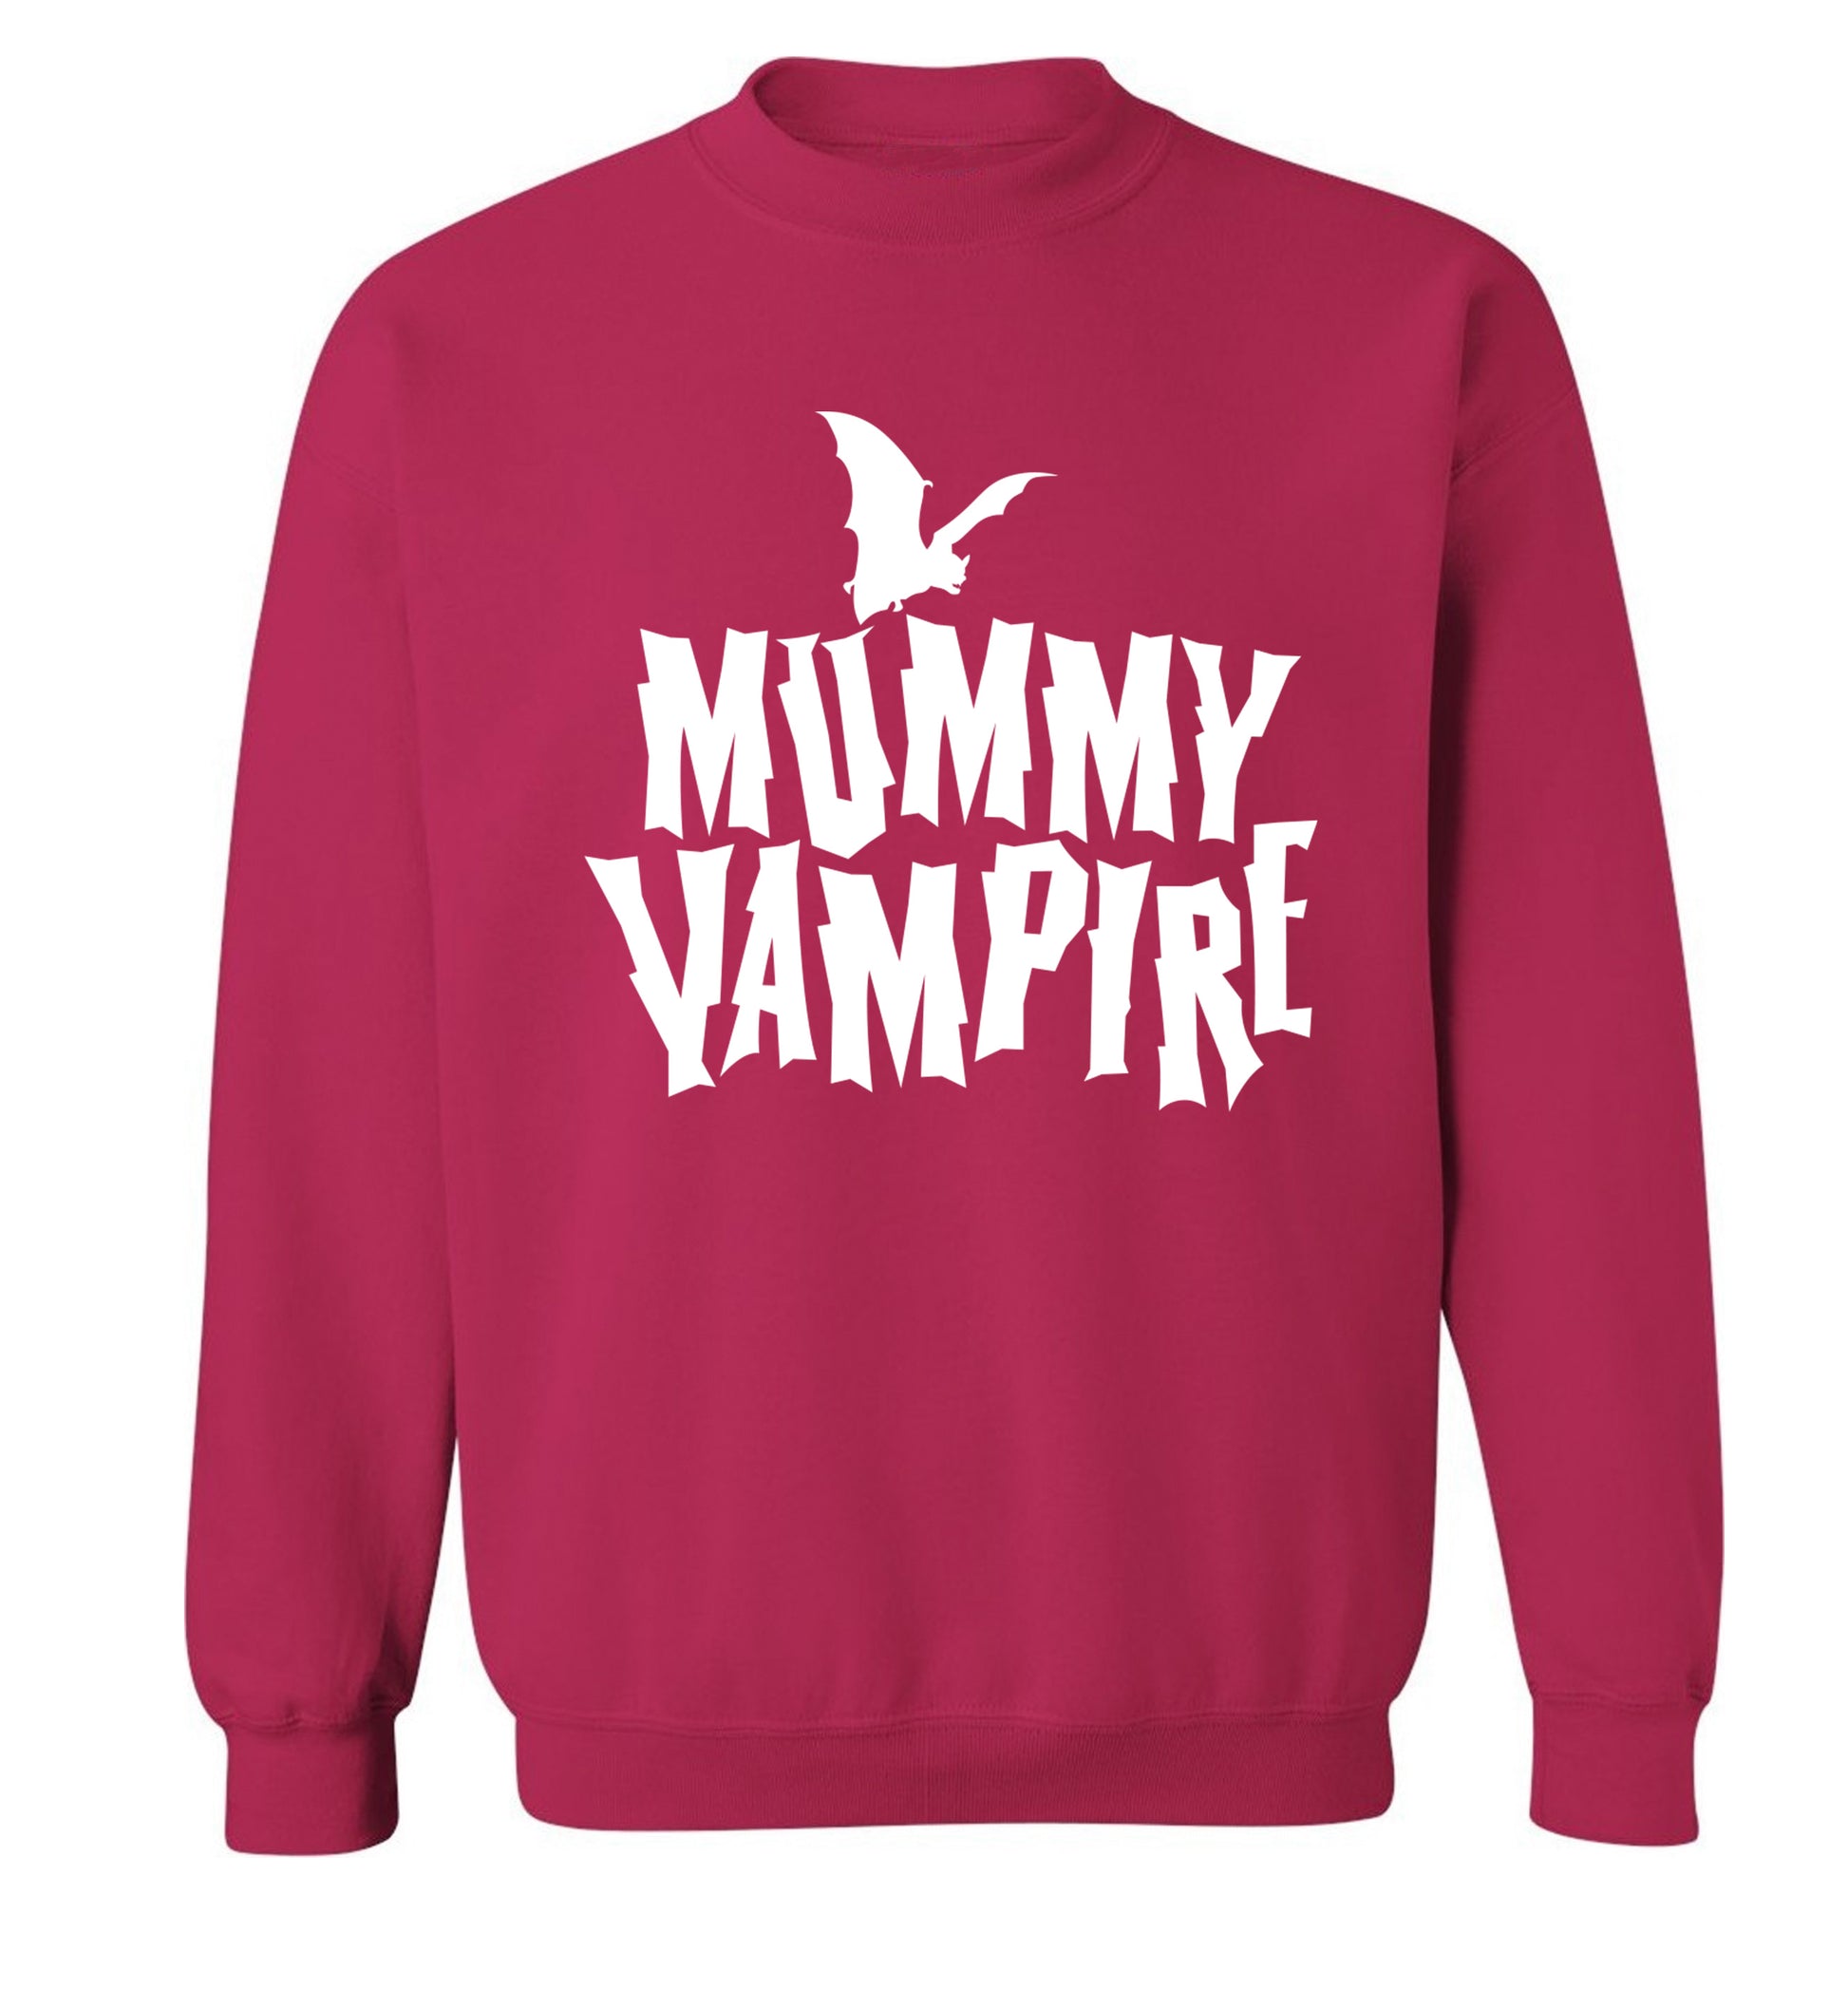 Mummy vampire adult's unisex pink sweater 2XL